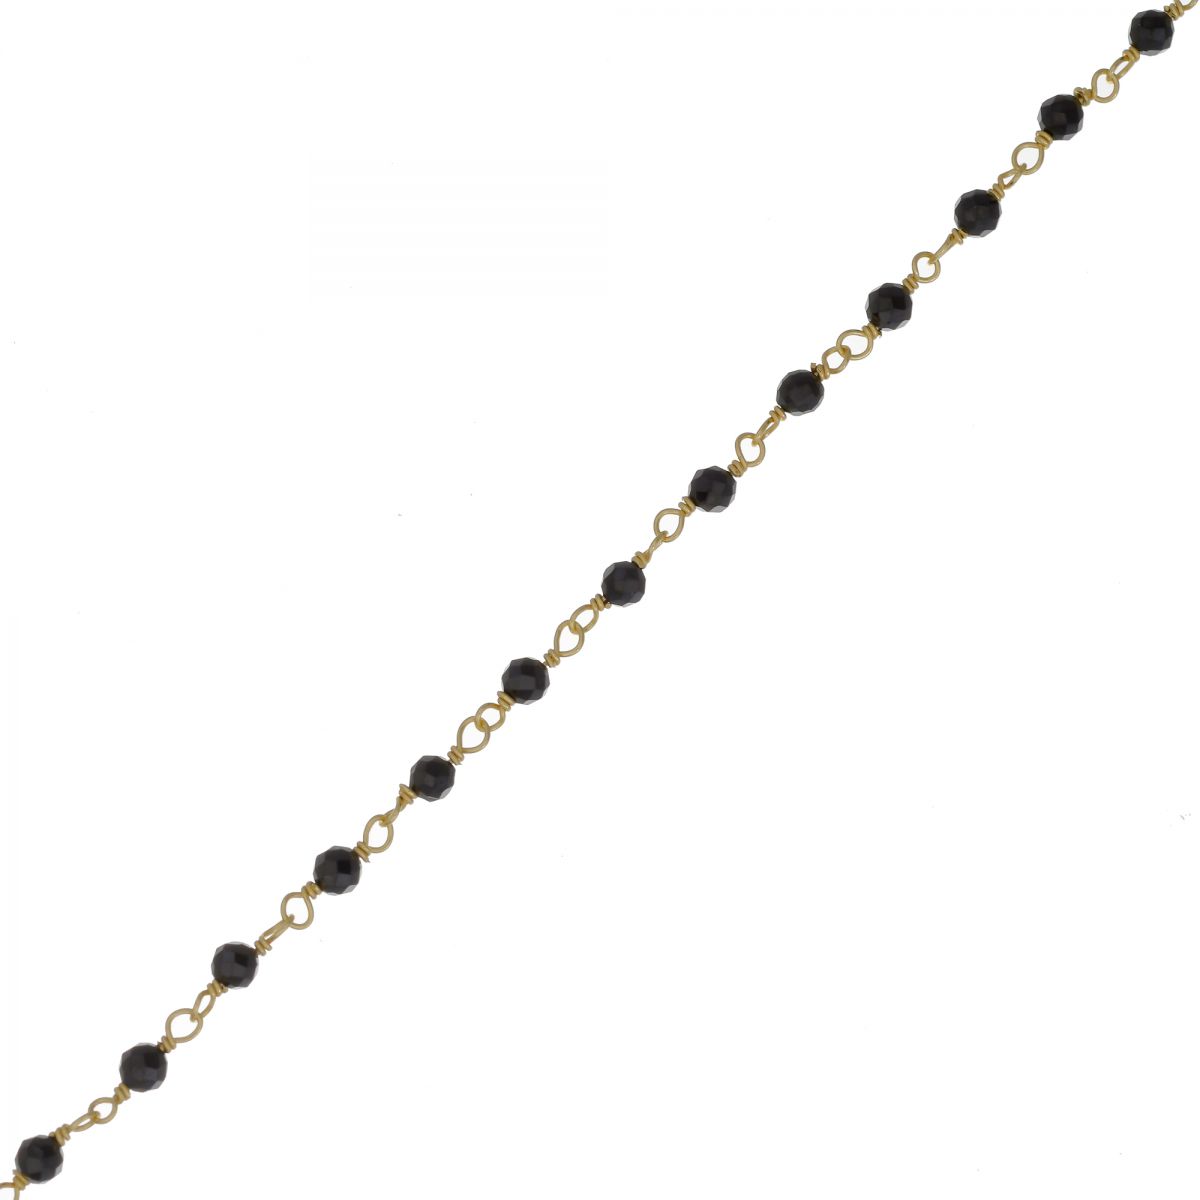 ff bracelet 3mm black agate beaded gold plated